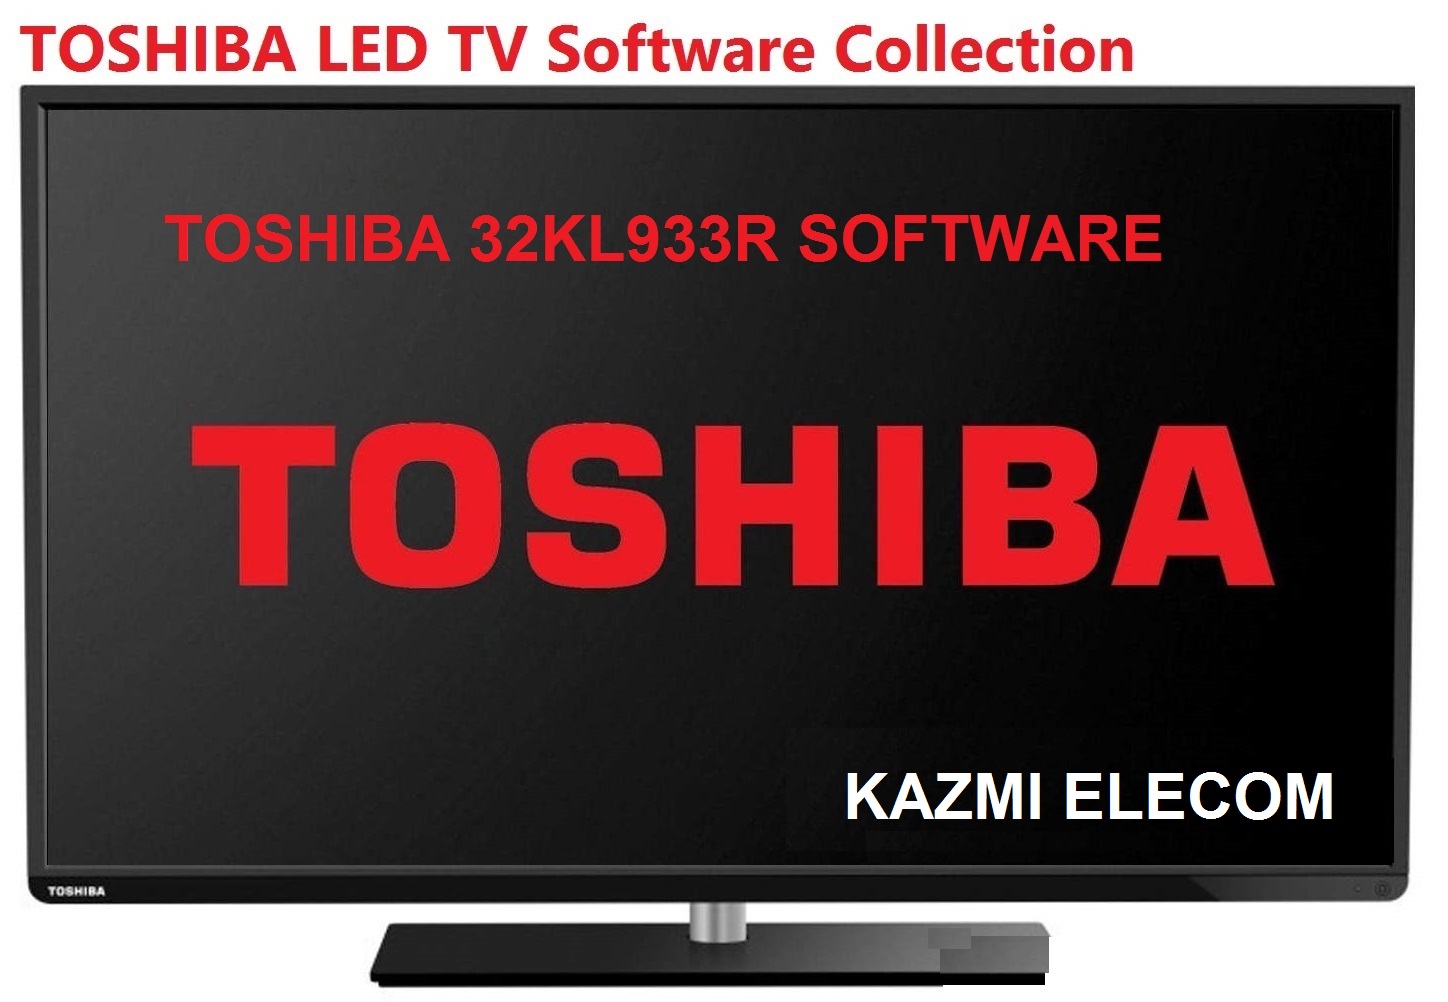 Toshiba 32Kl933R